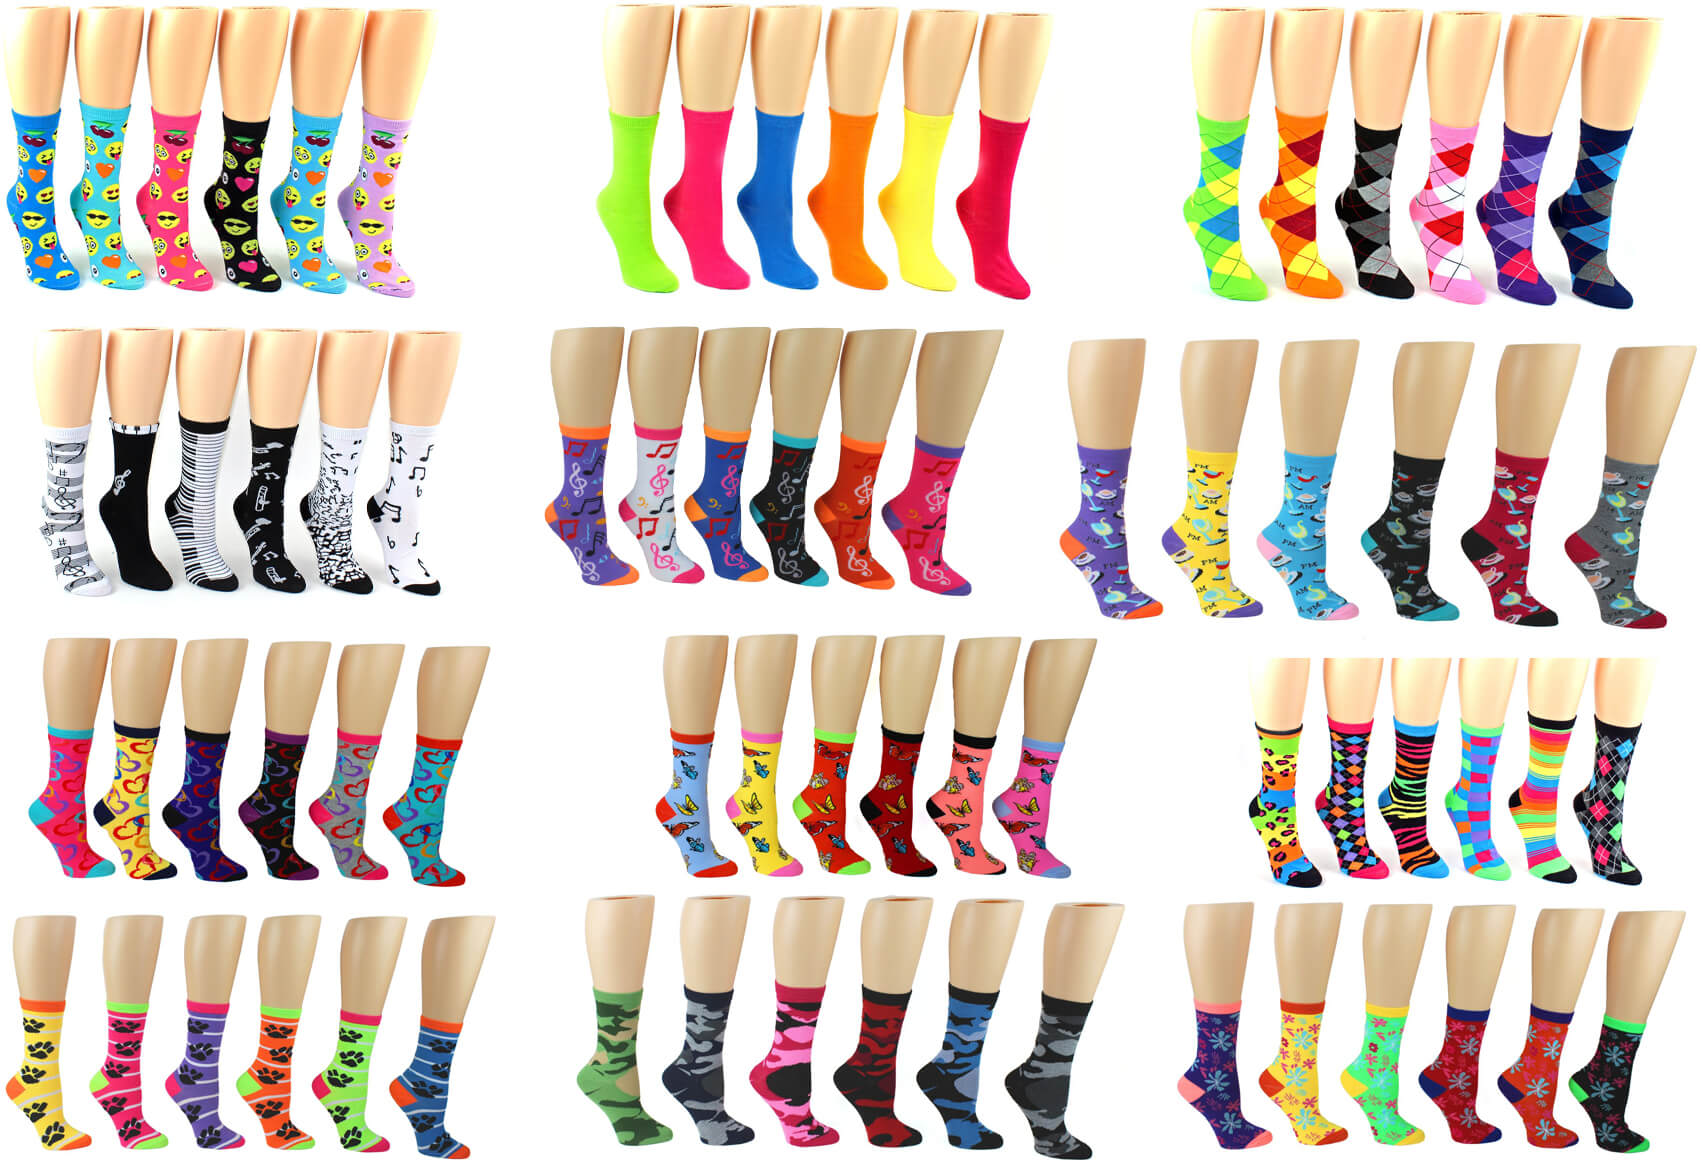 Sock Donation Drive Socks - Women's Novelty Crew  Socks - Assorted Styles